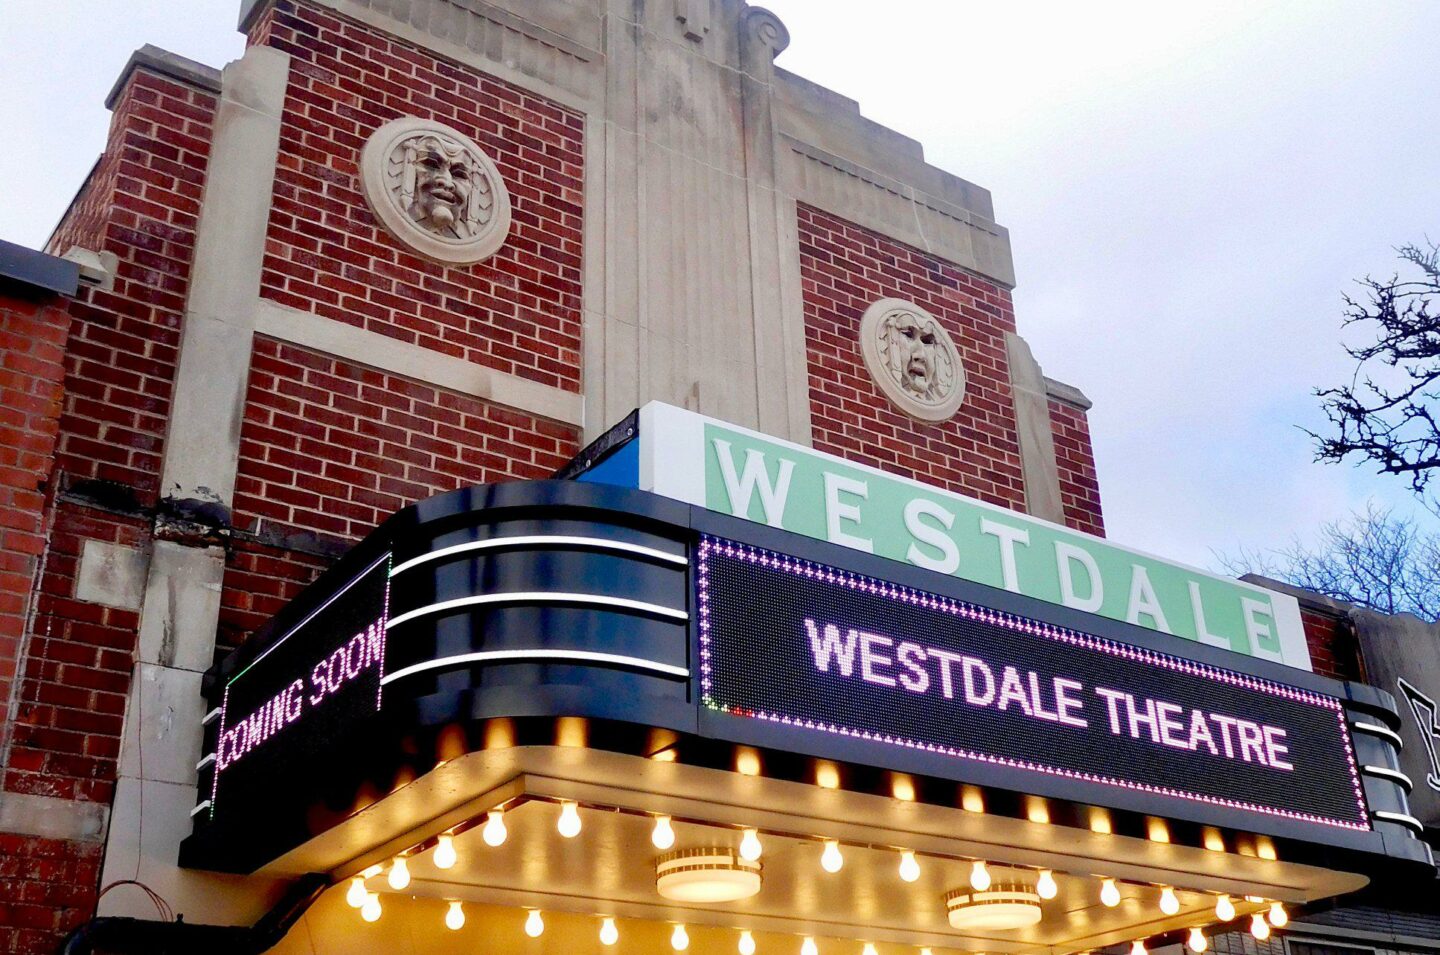 The Westdale